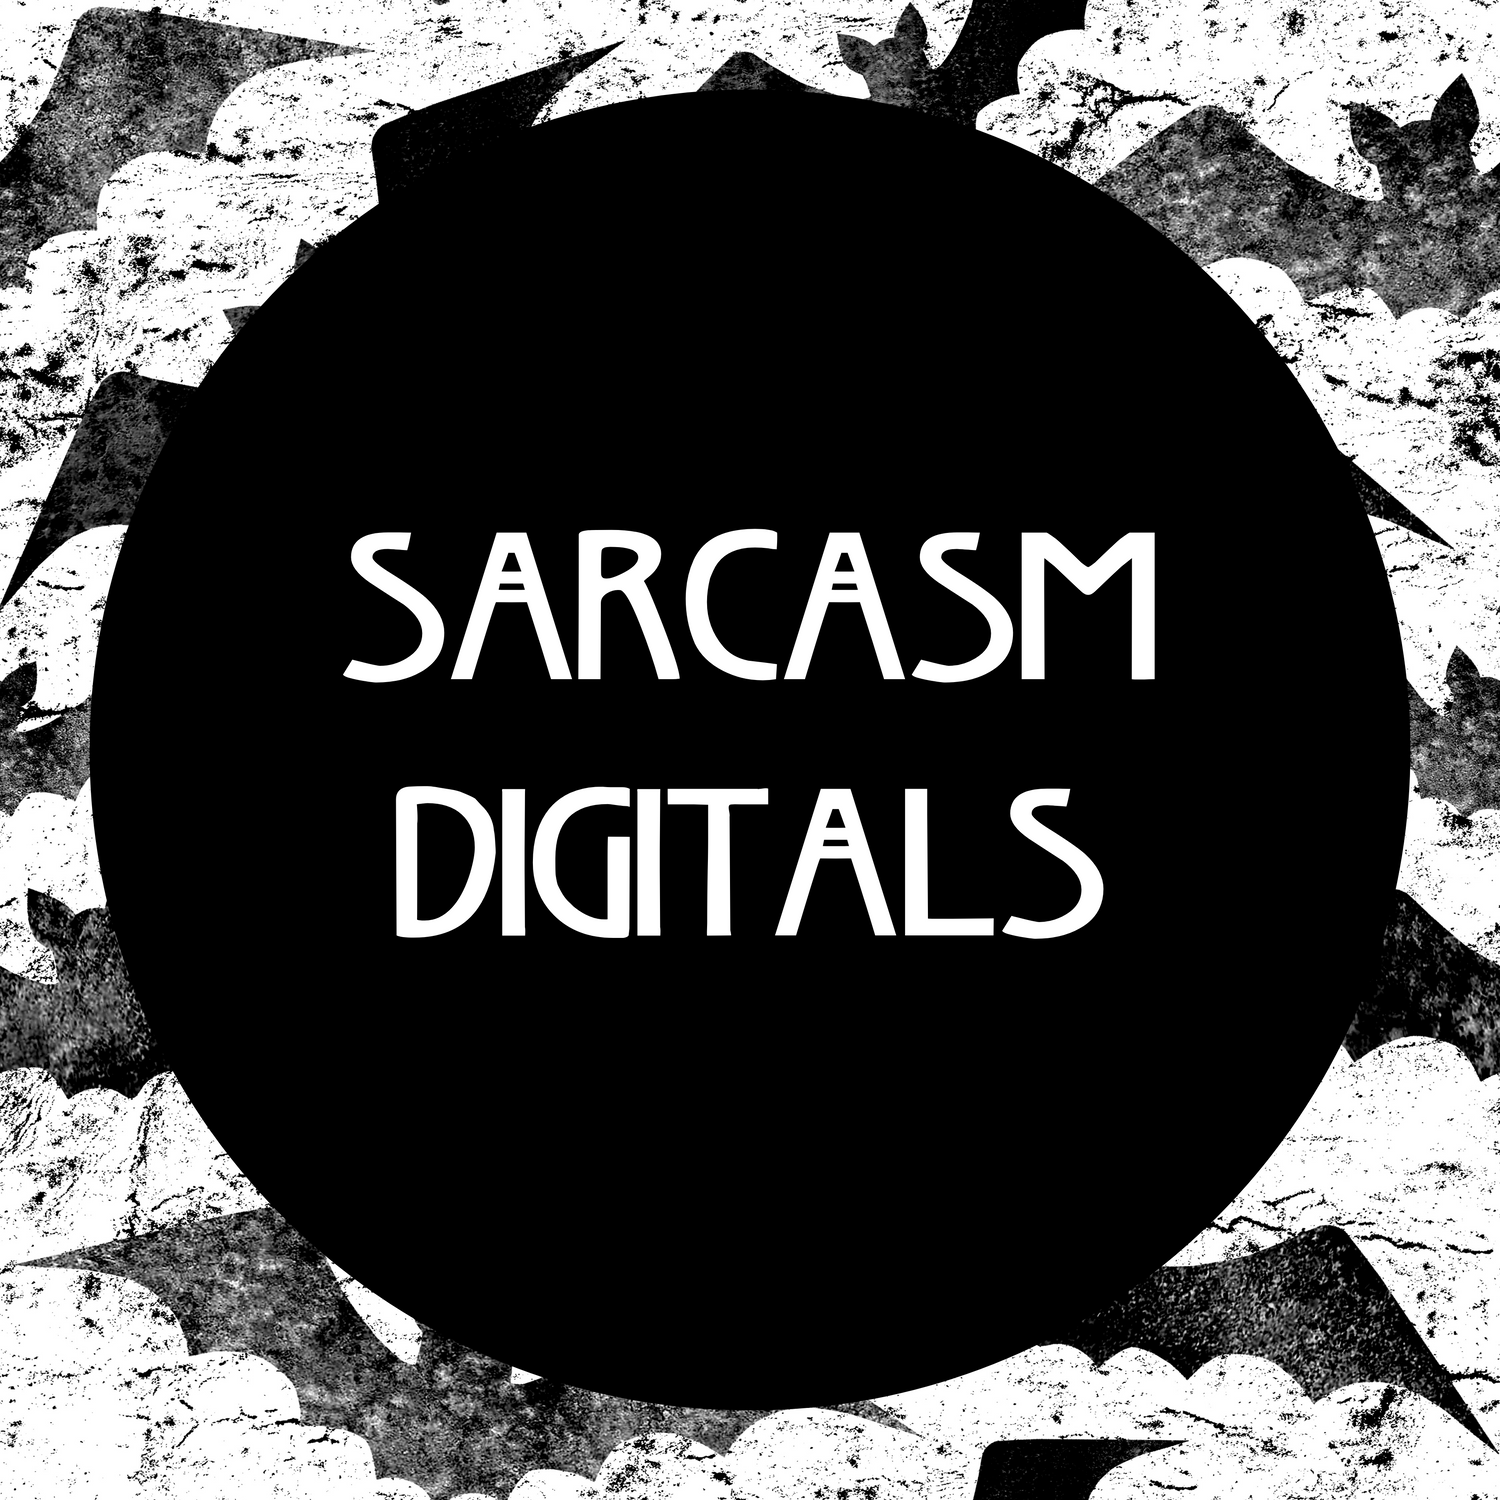 Sarcasm Digitals